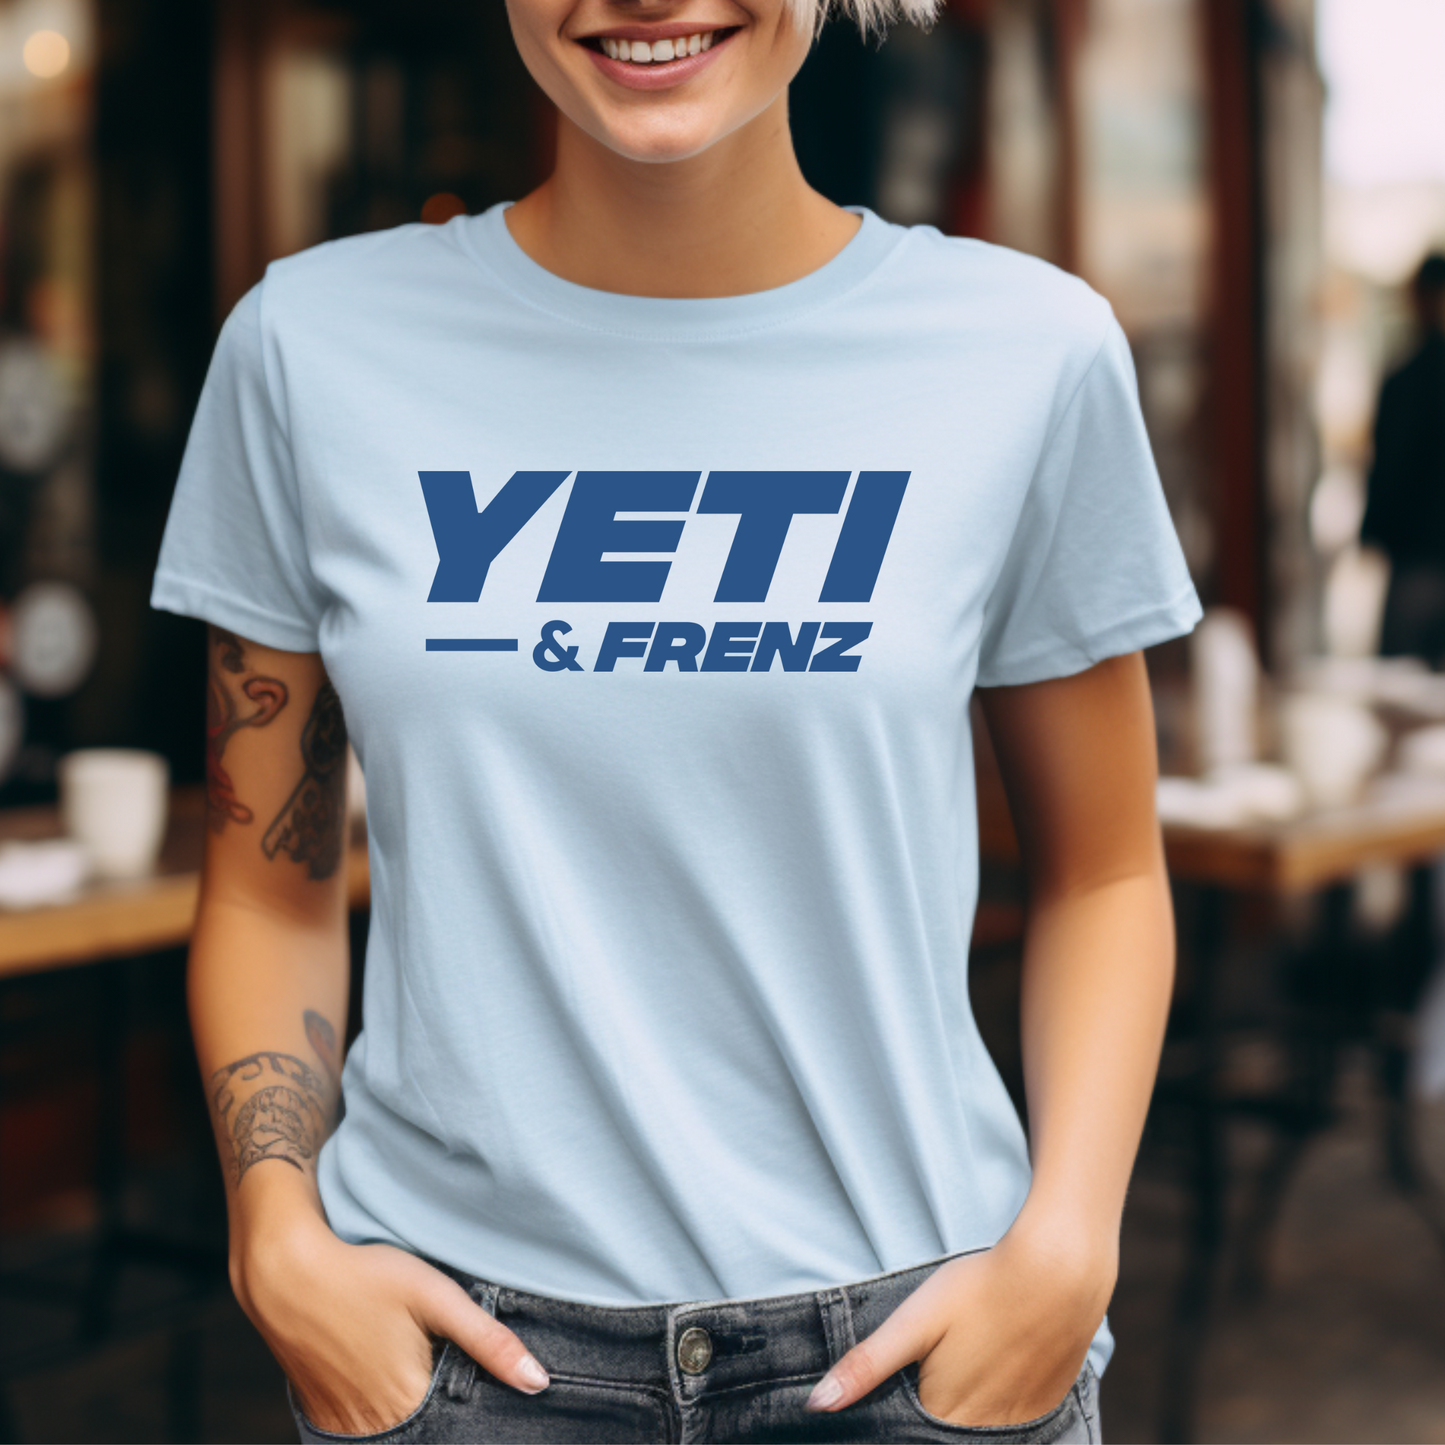 Yeti & Frenz Comfy Tee